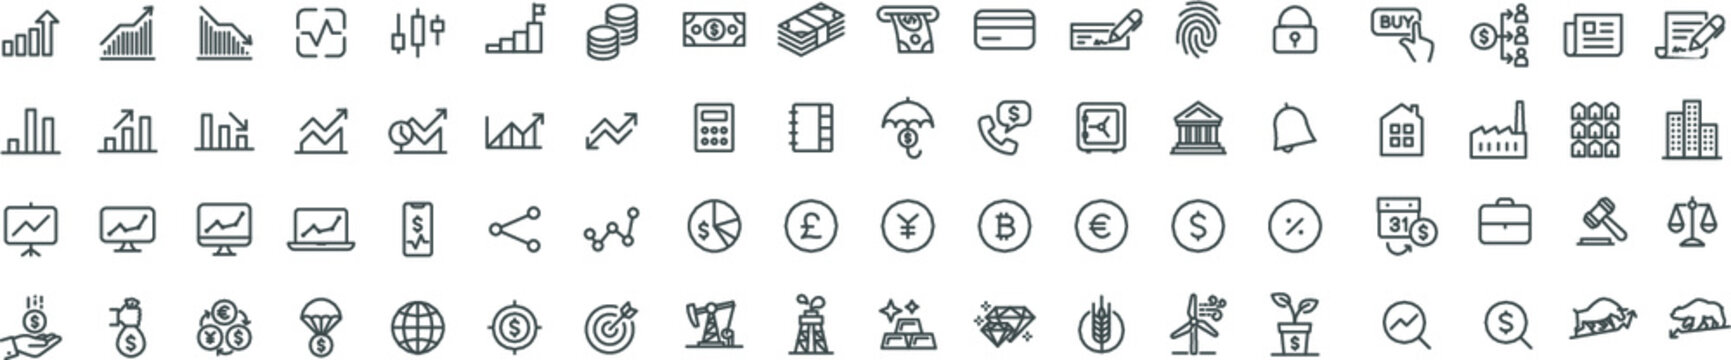 Stock Market & Trading Icons 